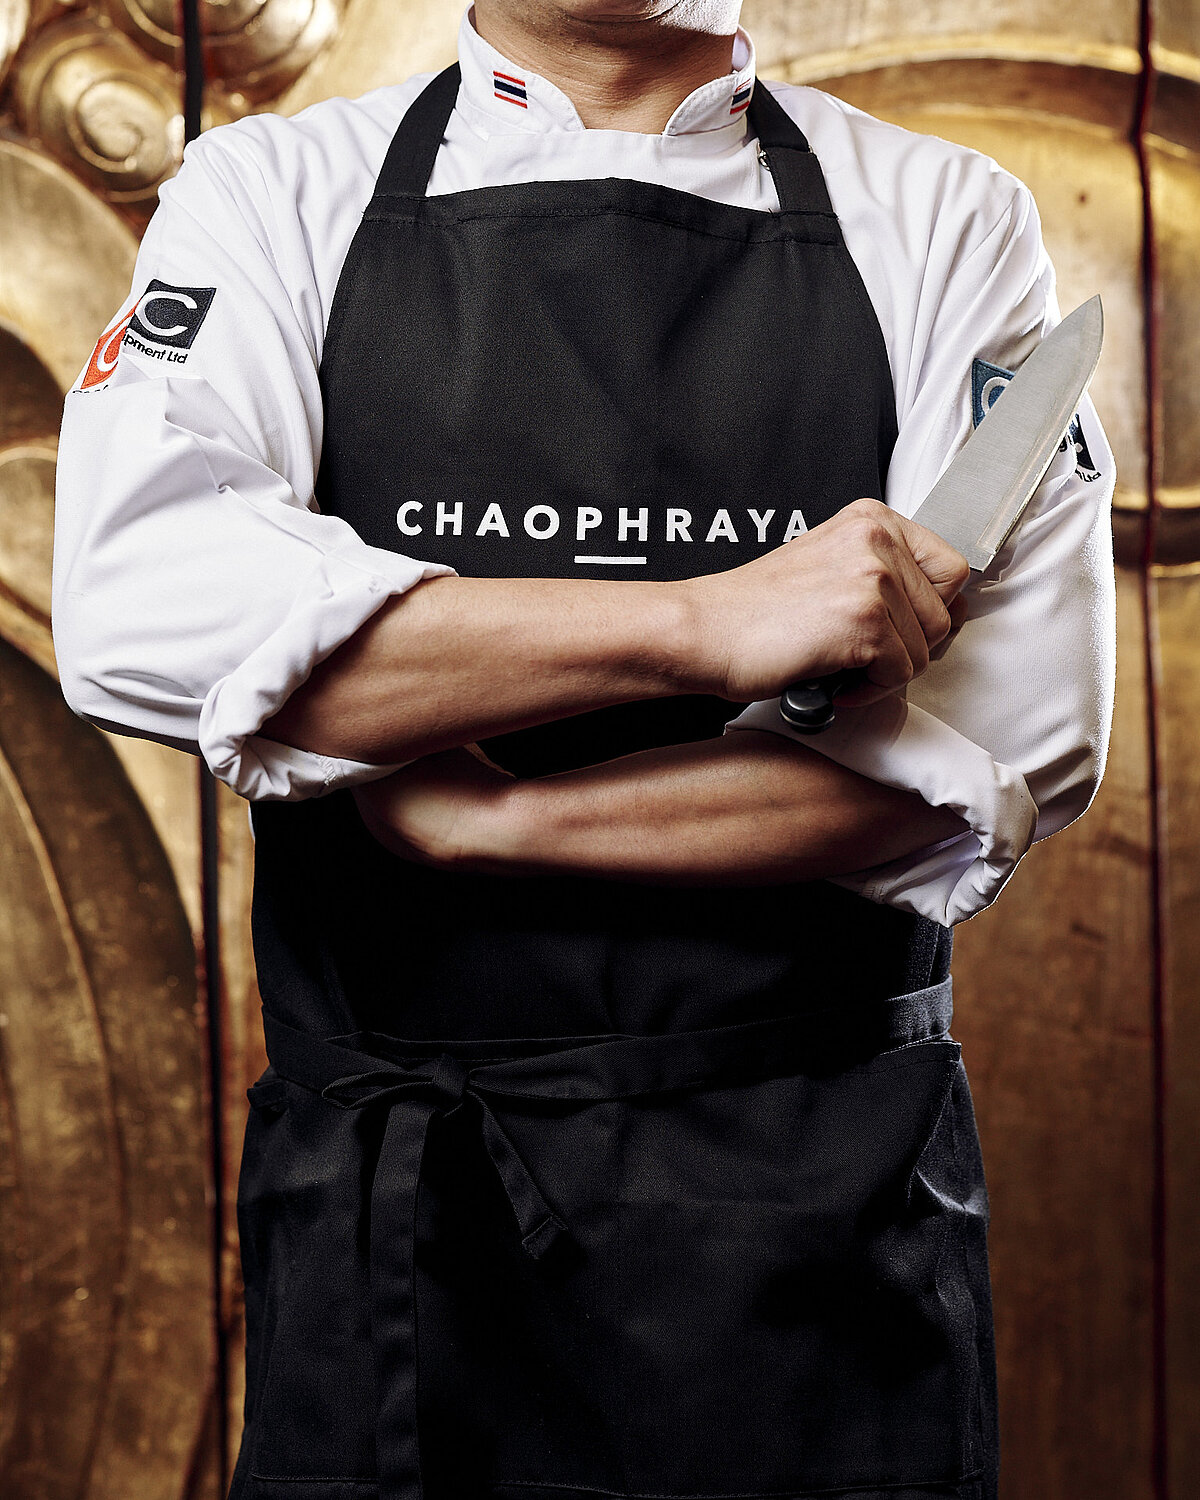 Chaophraya chef